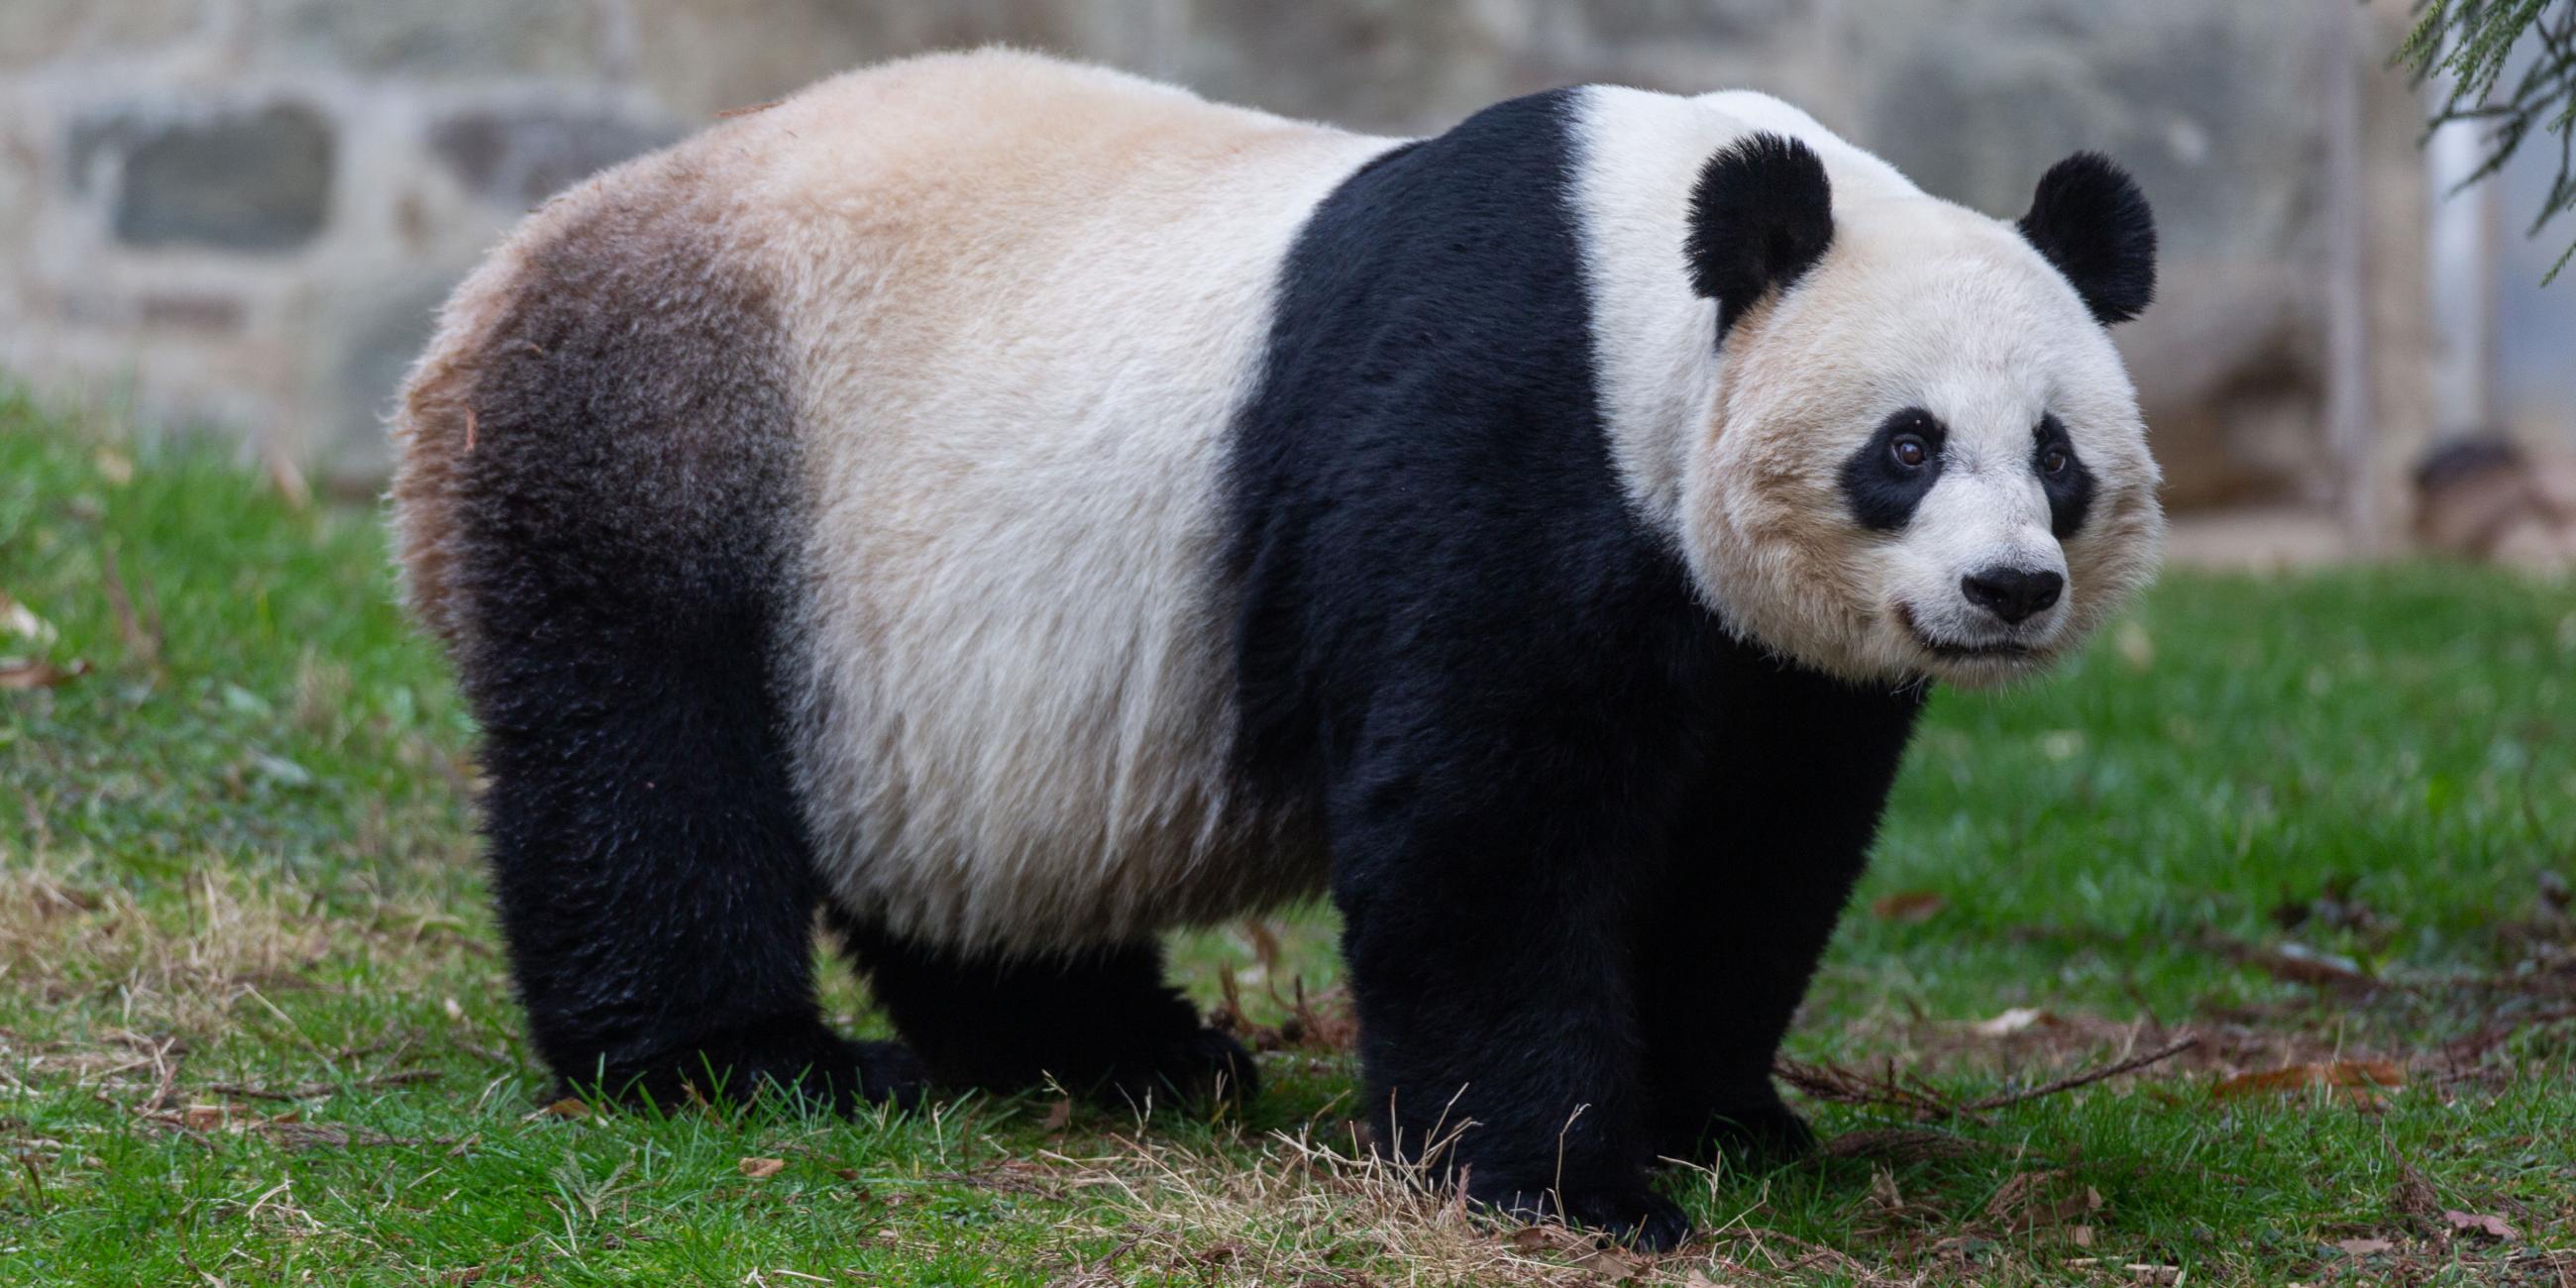 Celebrating National Panda Day Smithsonian's National Zoo and